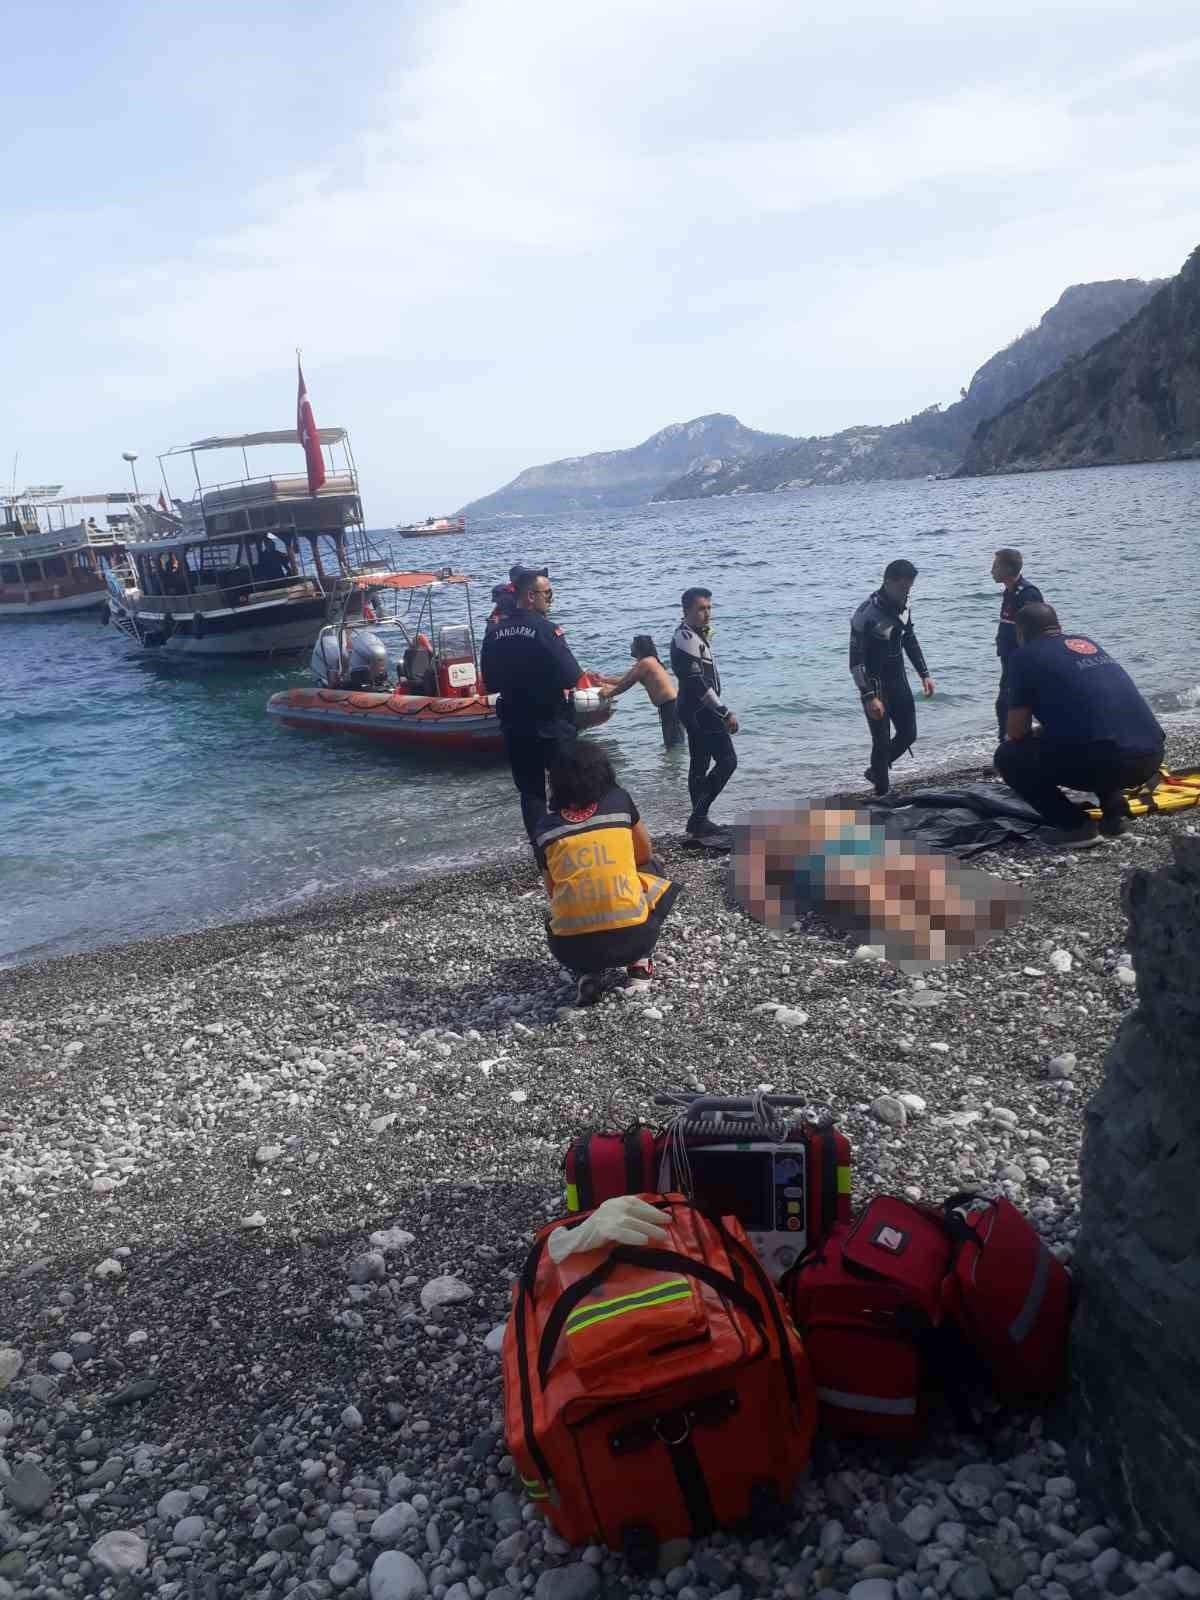 marmarise tatile gelen ingiliz turist denizde hayatini kaybetti 0 q8Rs9c6v